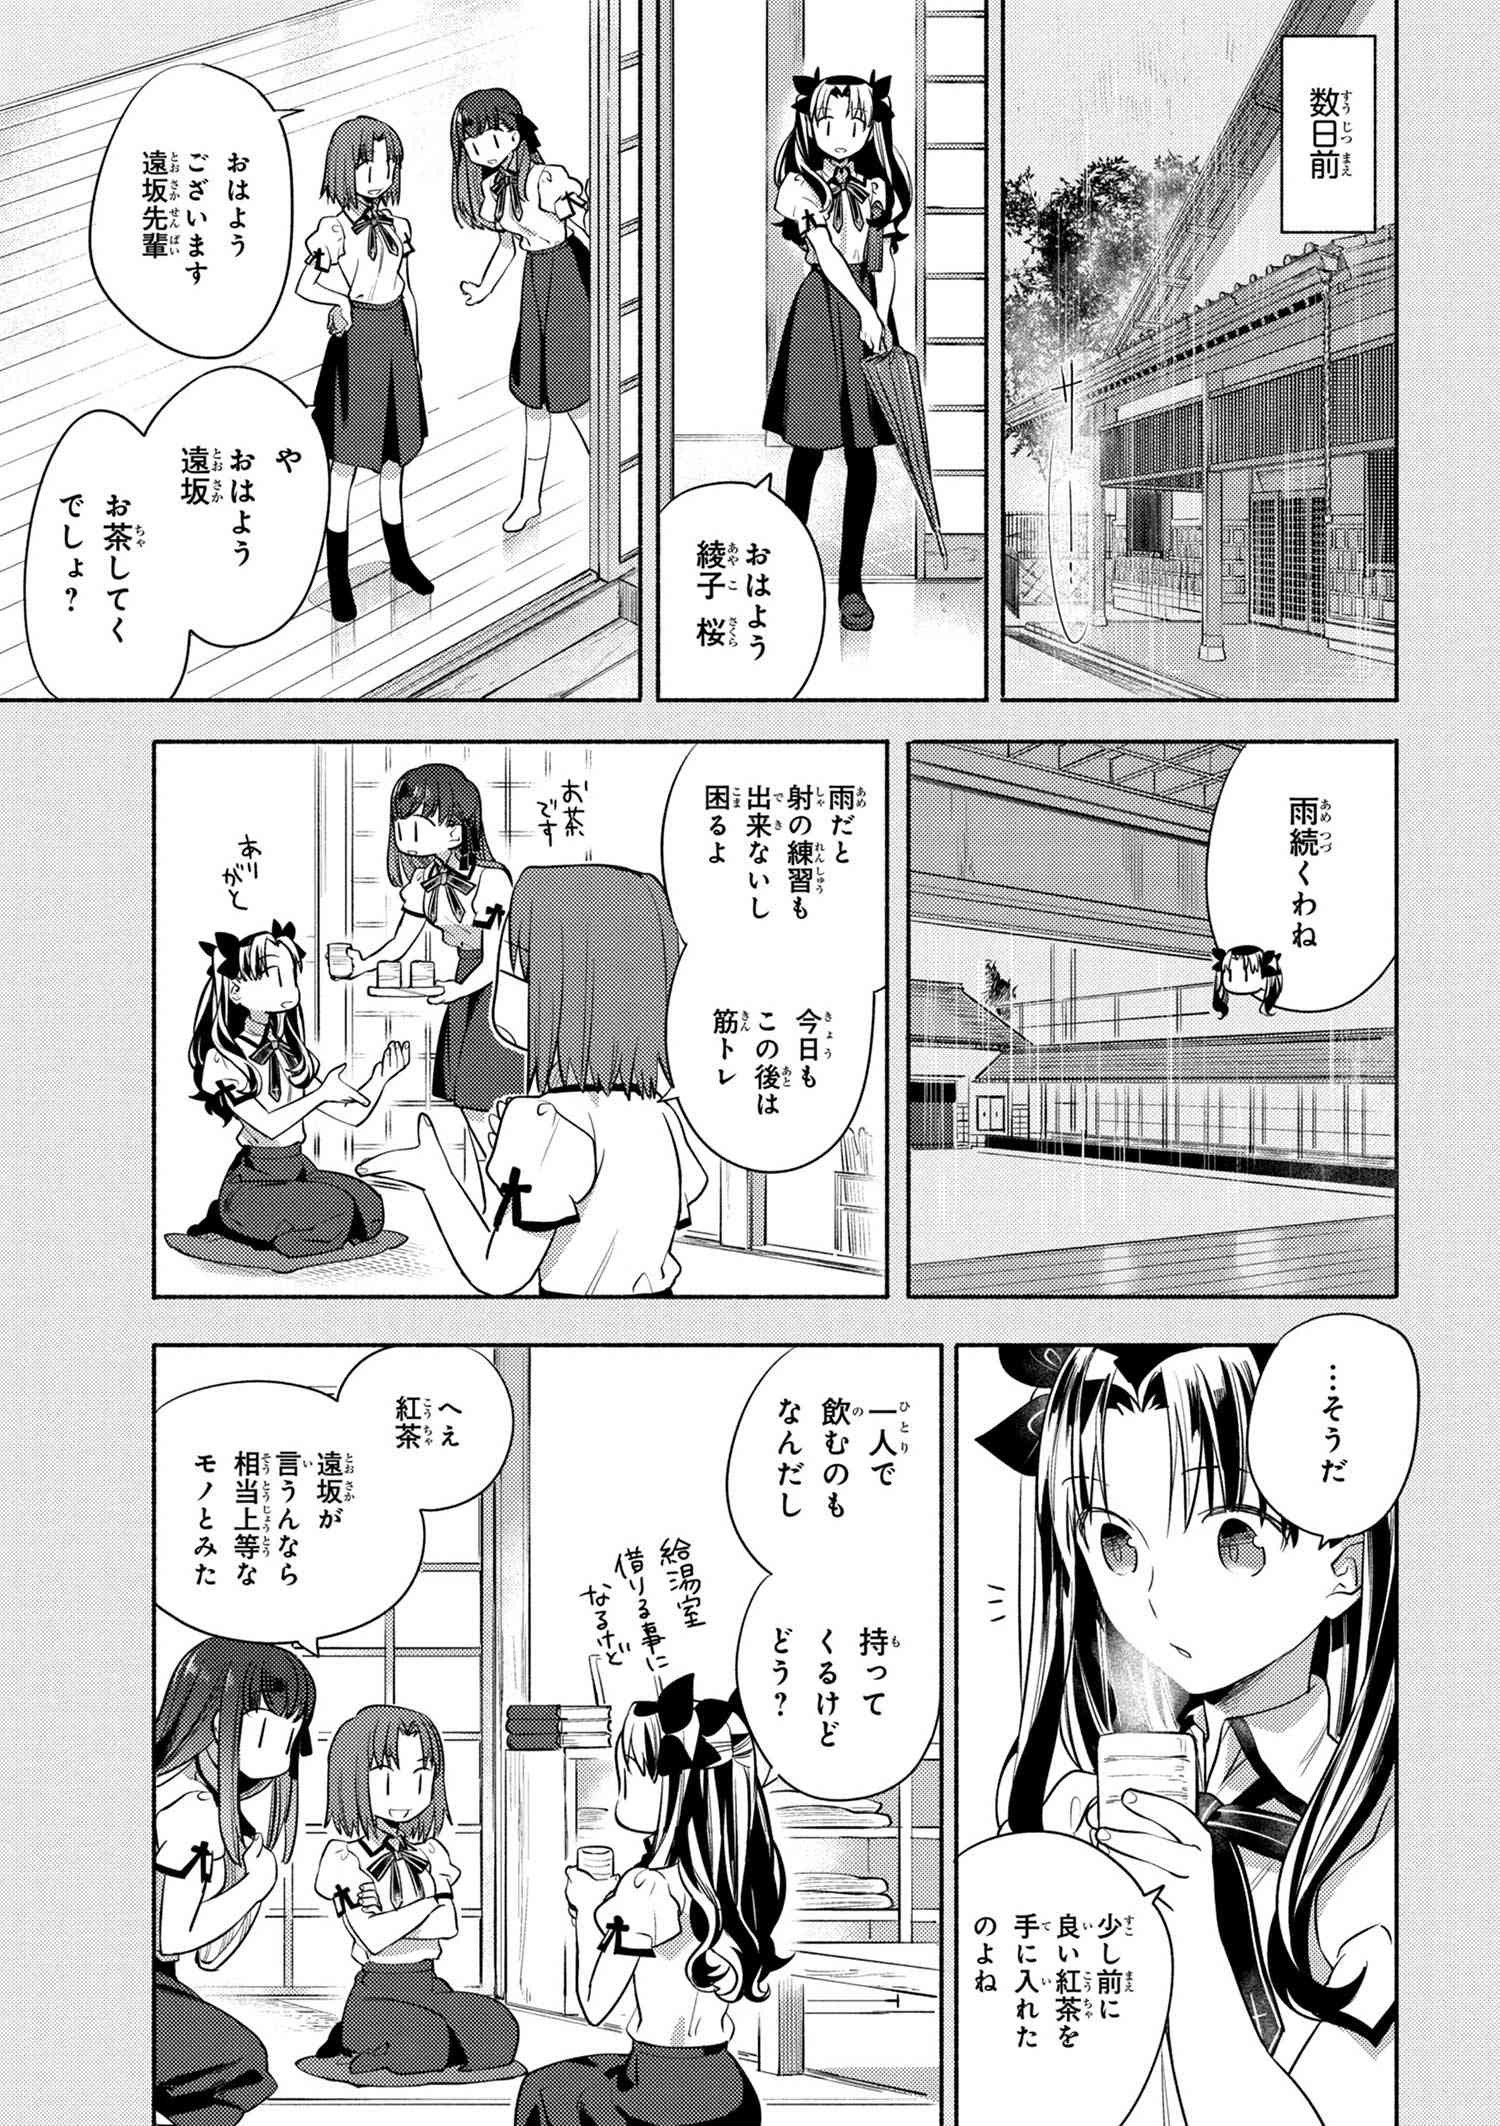 Emiya-san Chi no Kyou no Gohan - Chapter 15 - Page 3